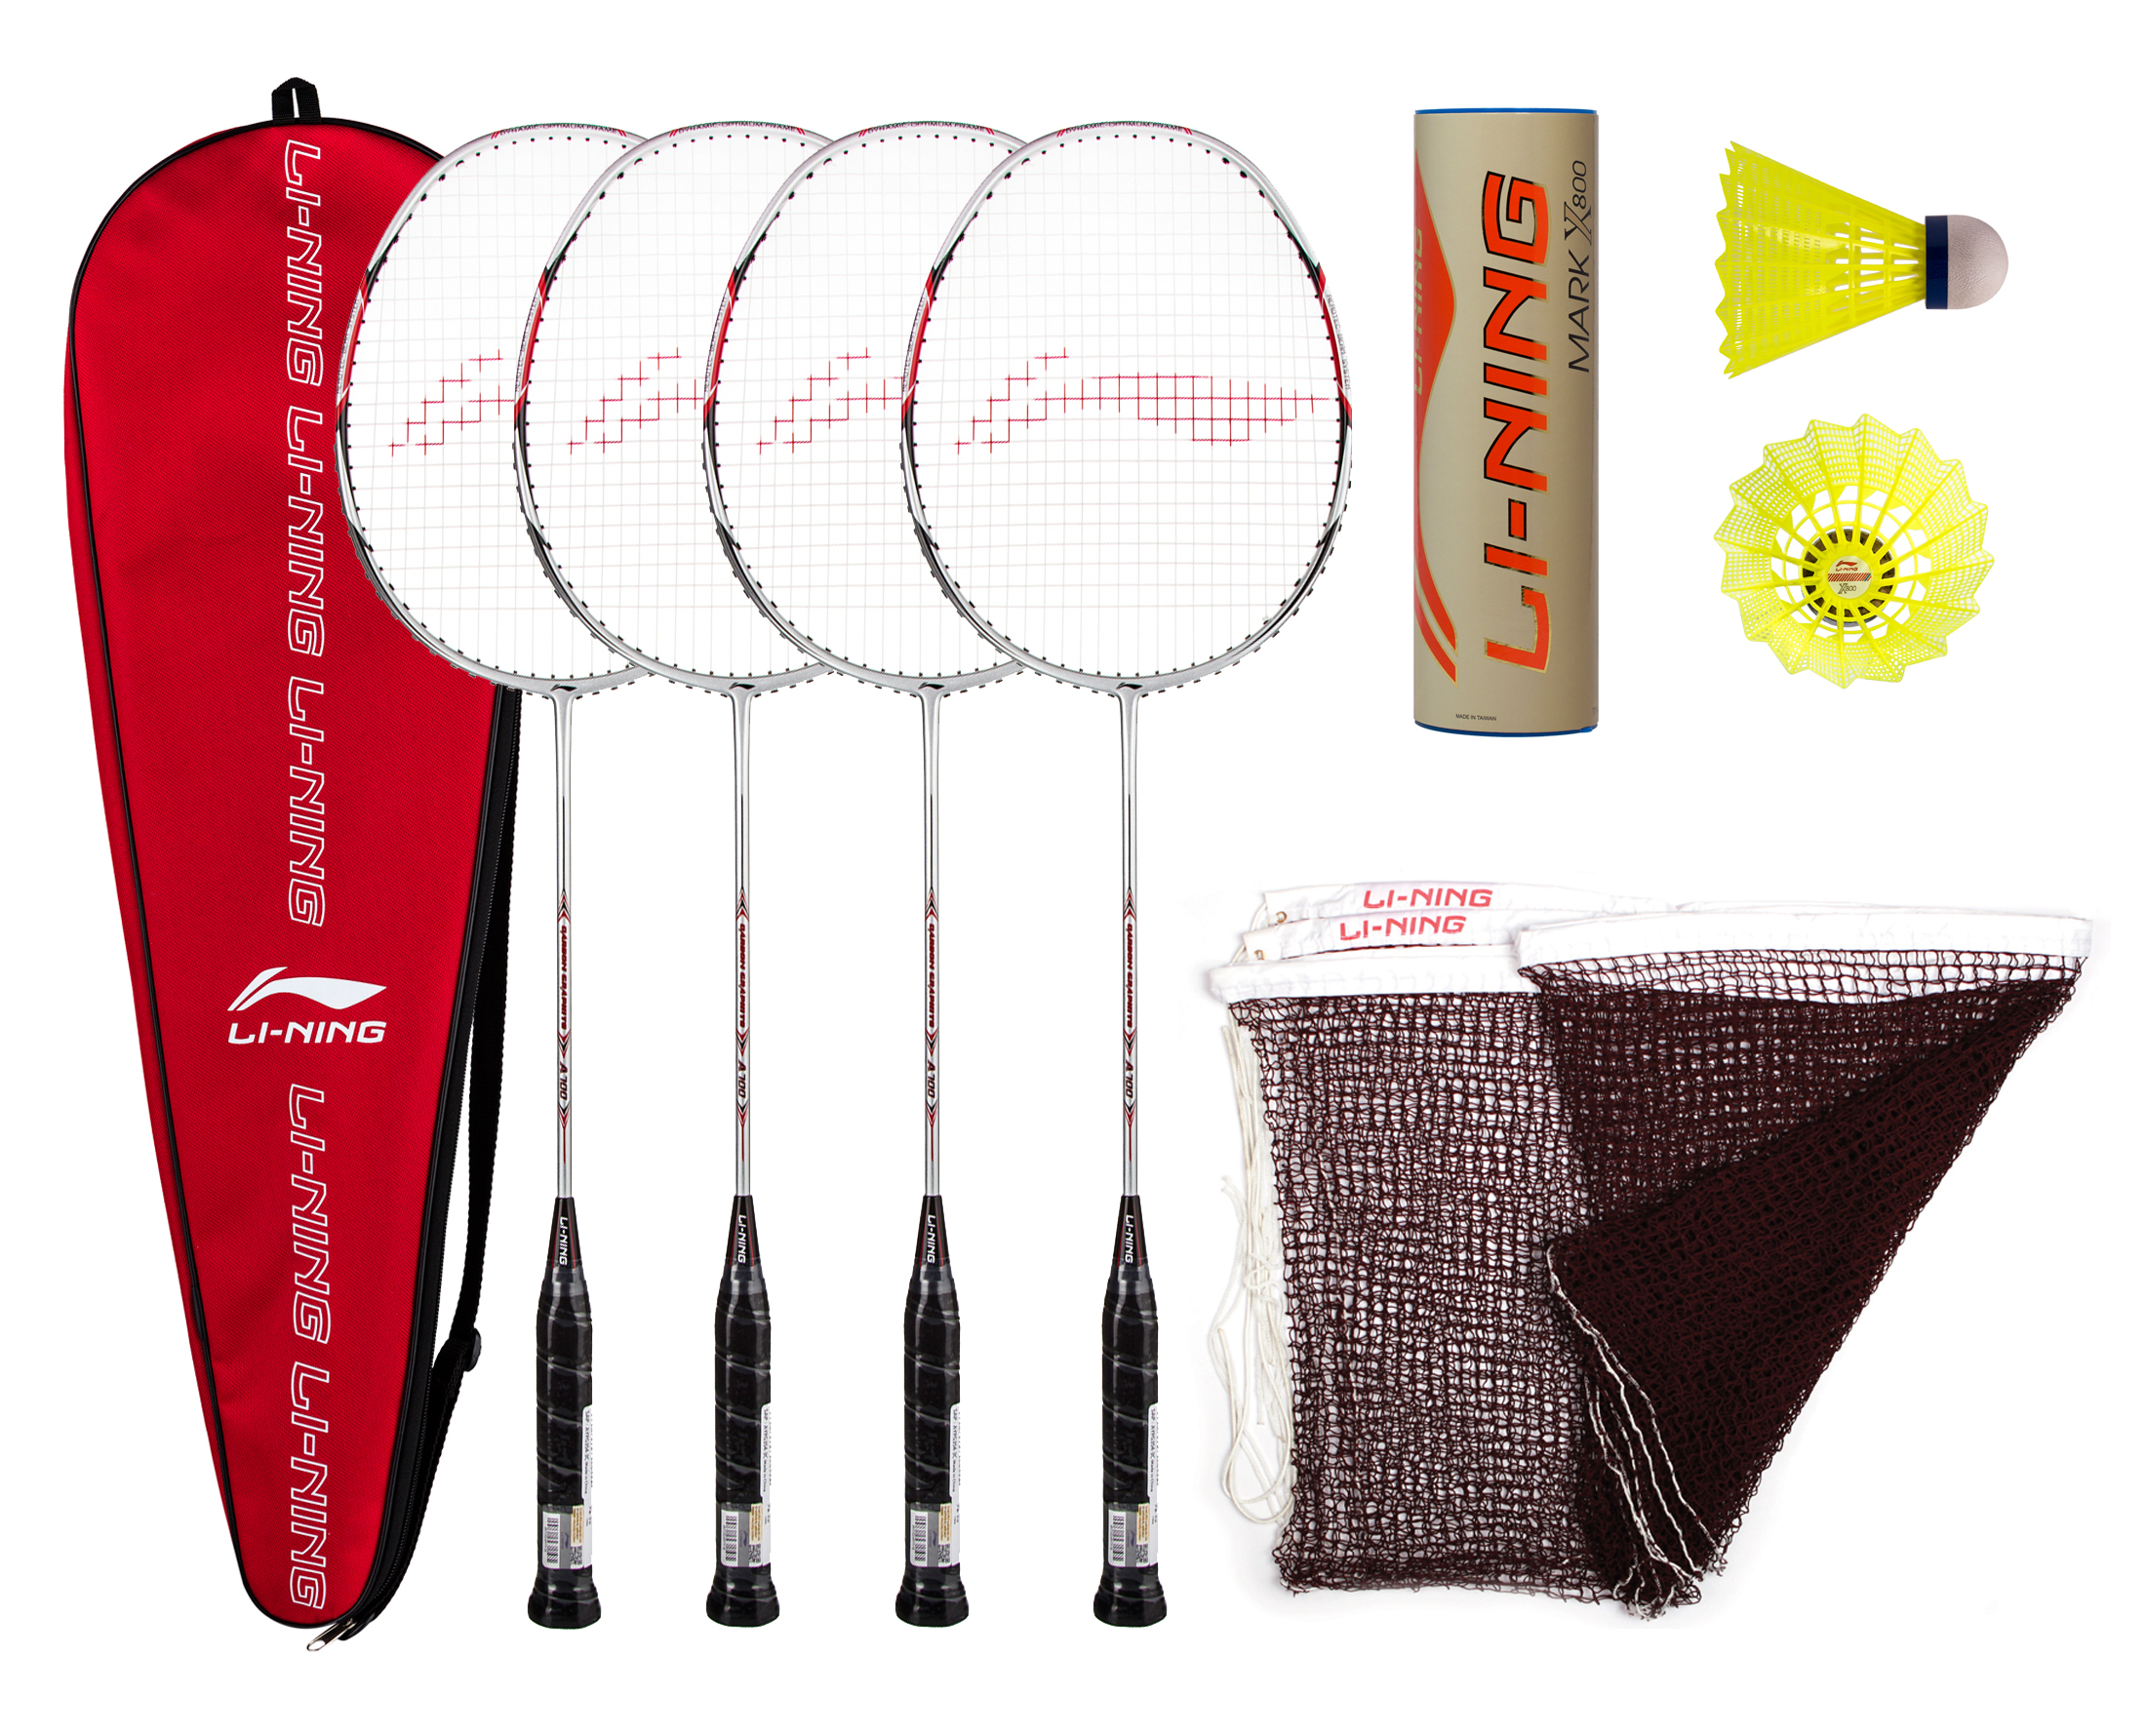 Lines Shuttles Holdall Premium Badminton Set x4 Graphite Badminton Rackets 